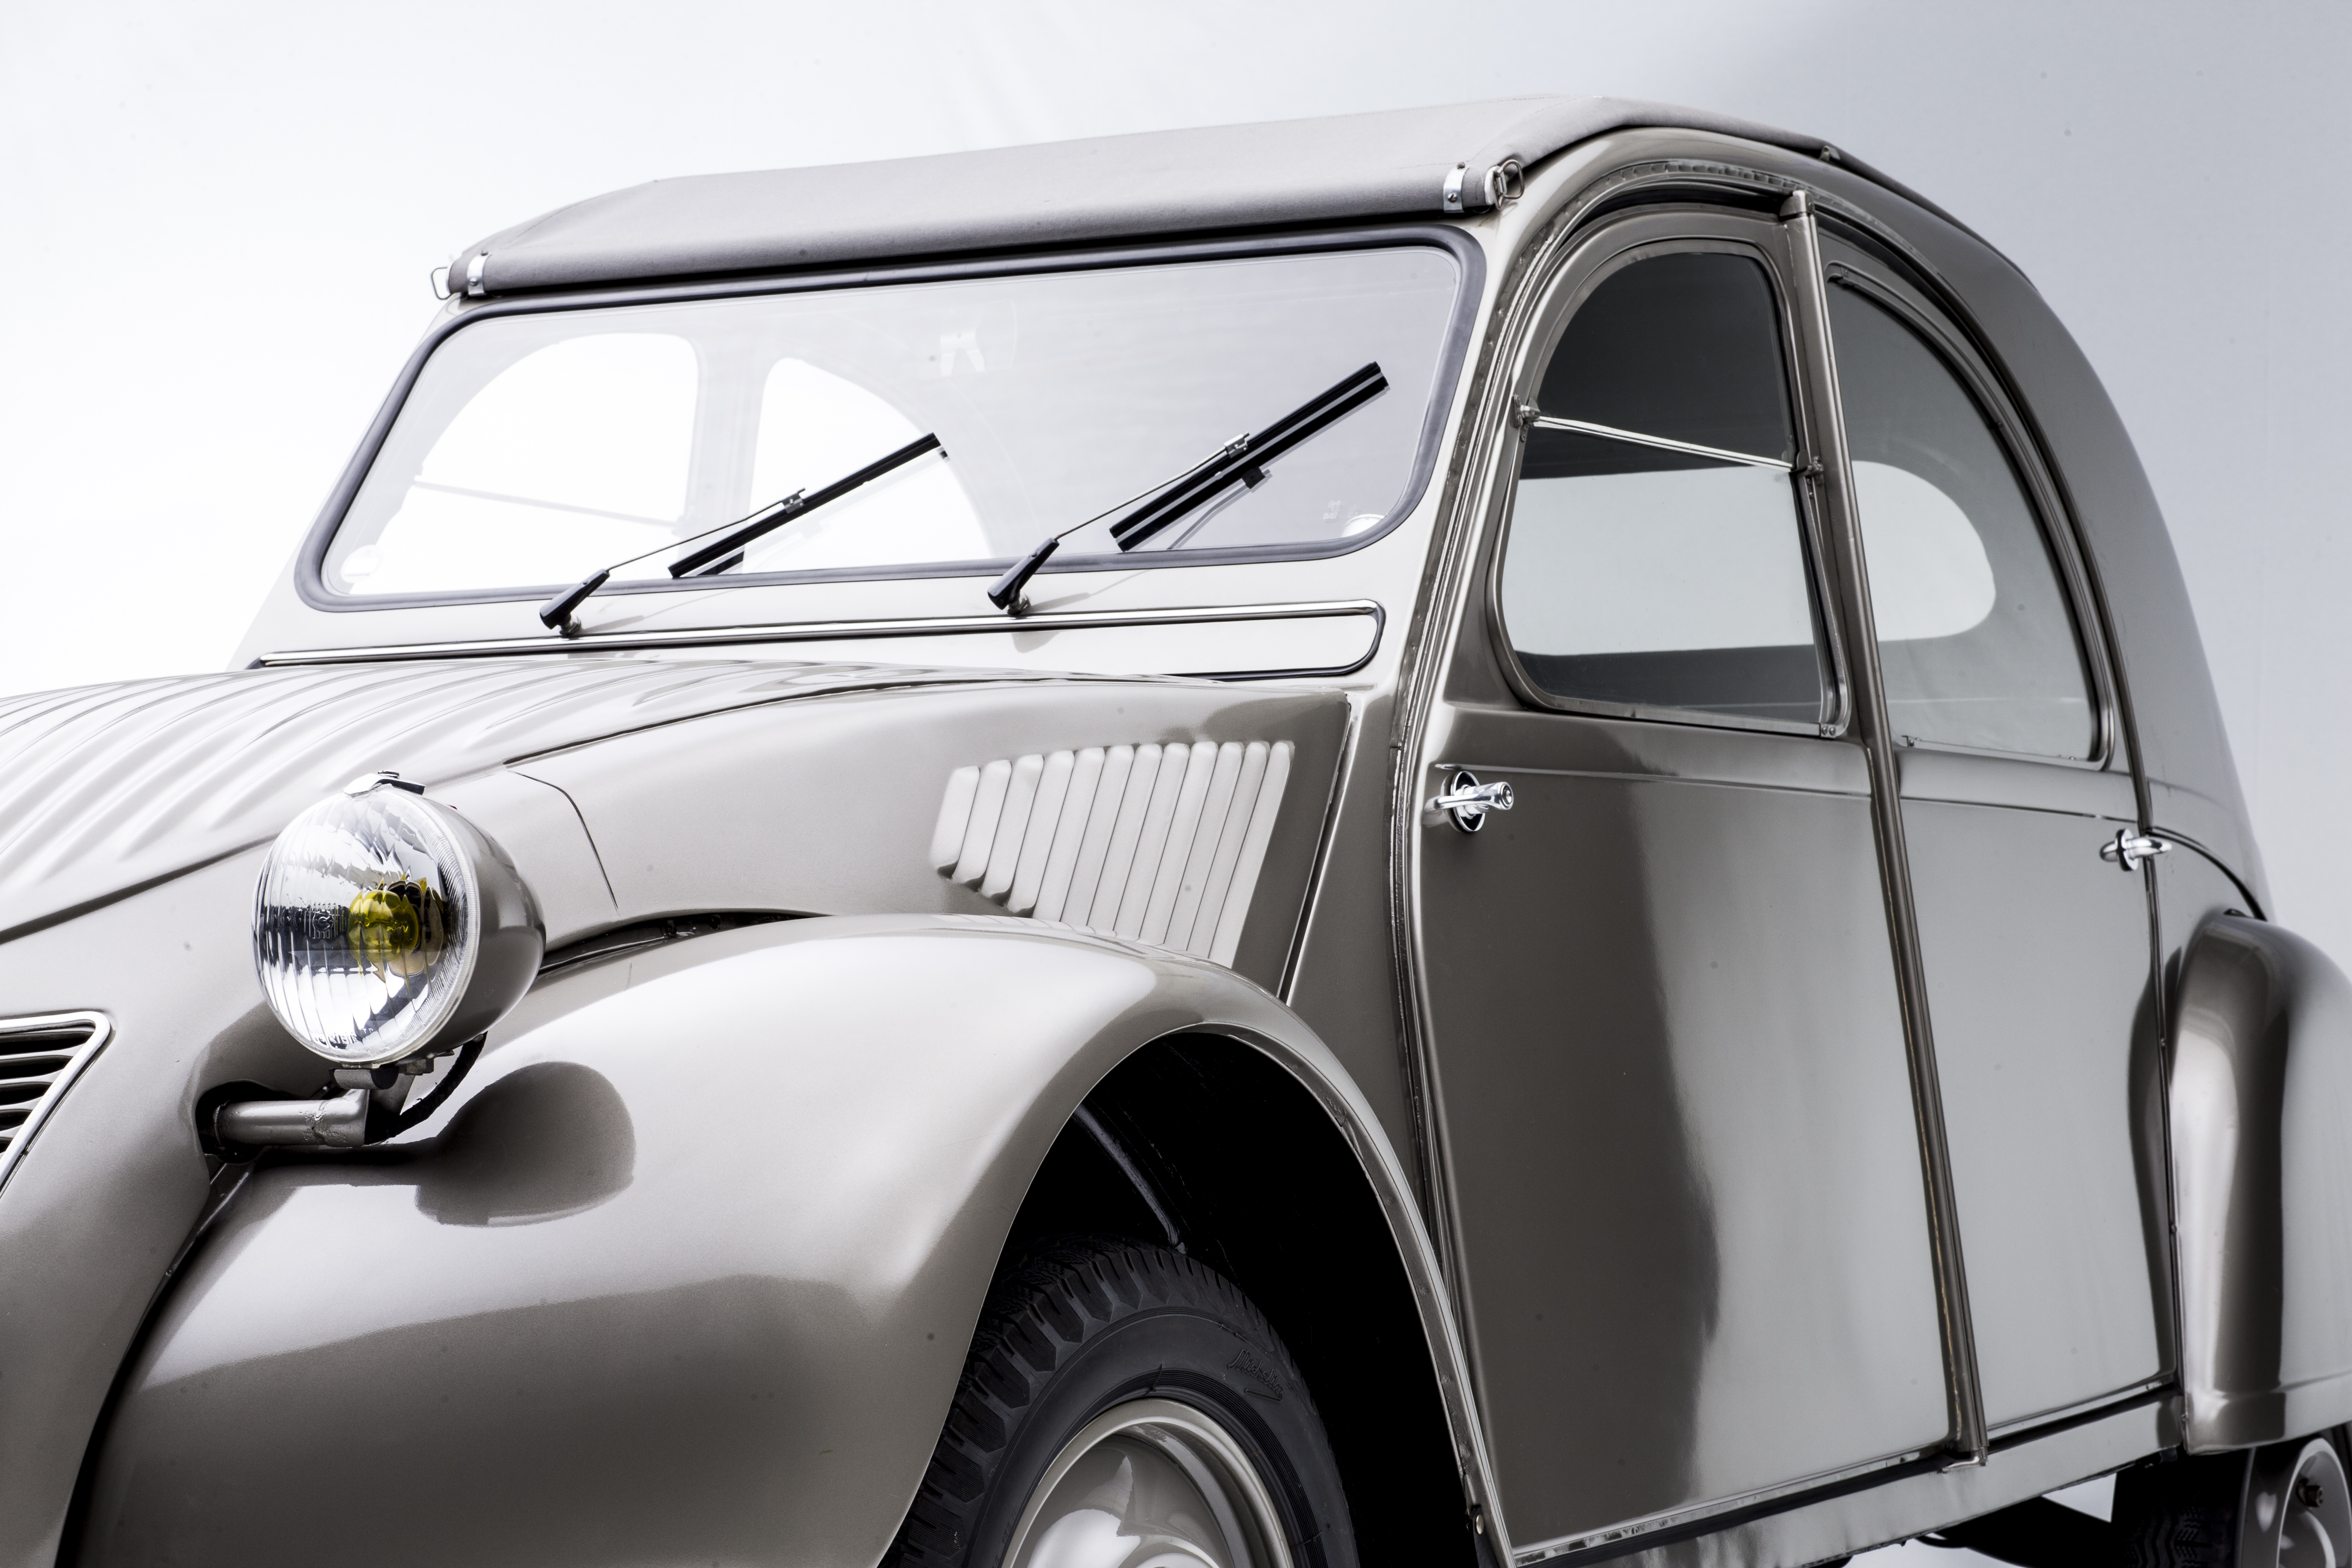 Citroën and Playmobil partner to create the Citroën 2CV Playmobil set -  Global Icons